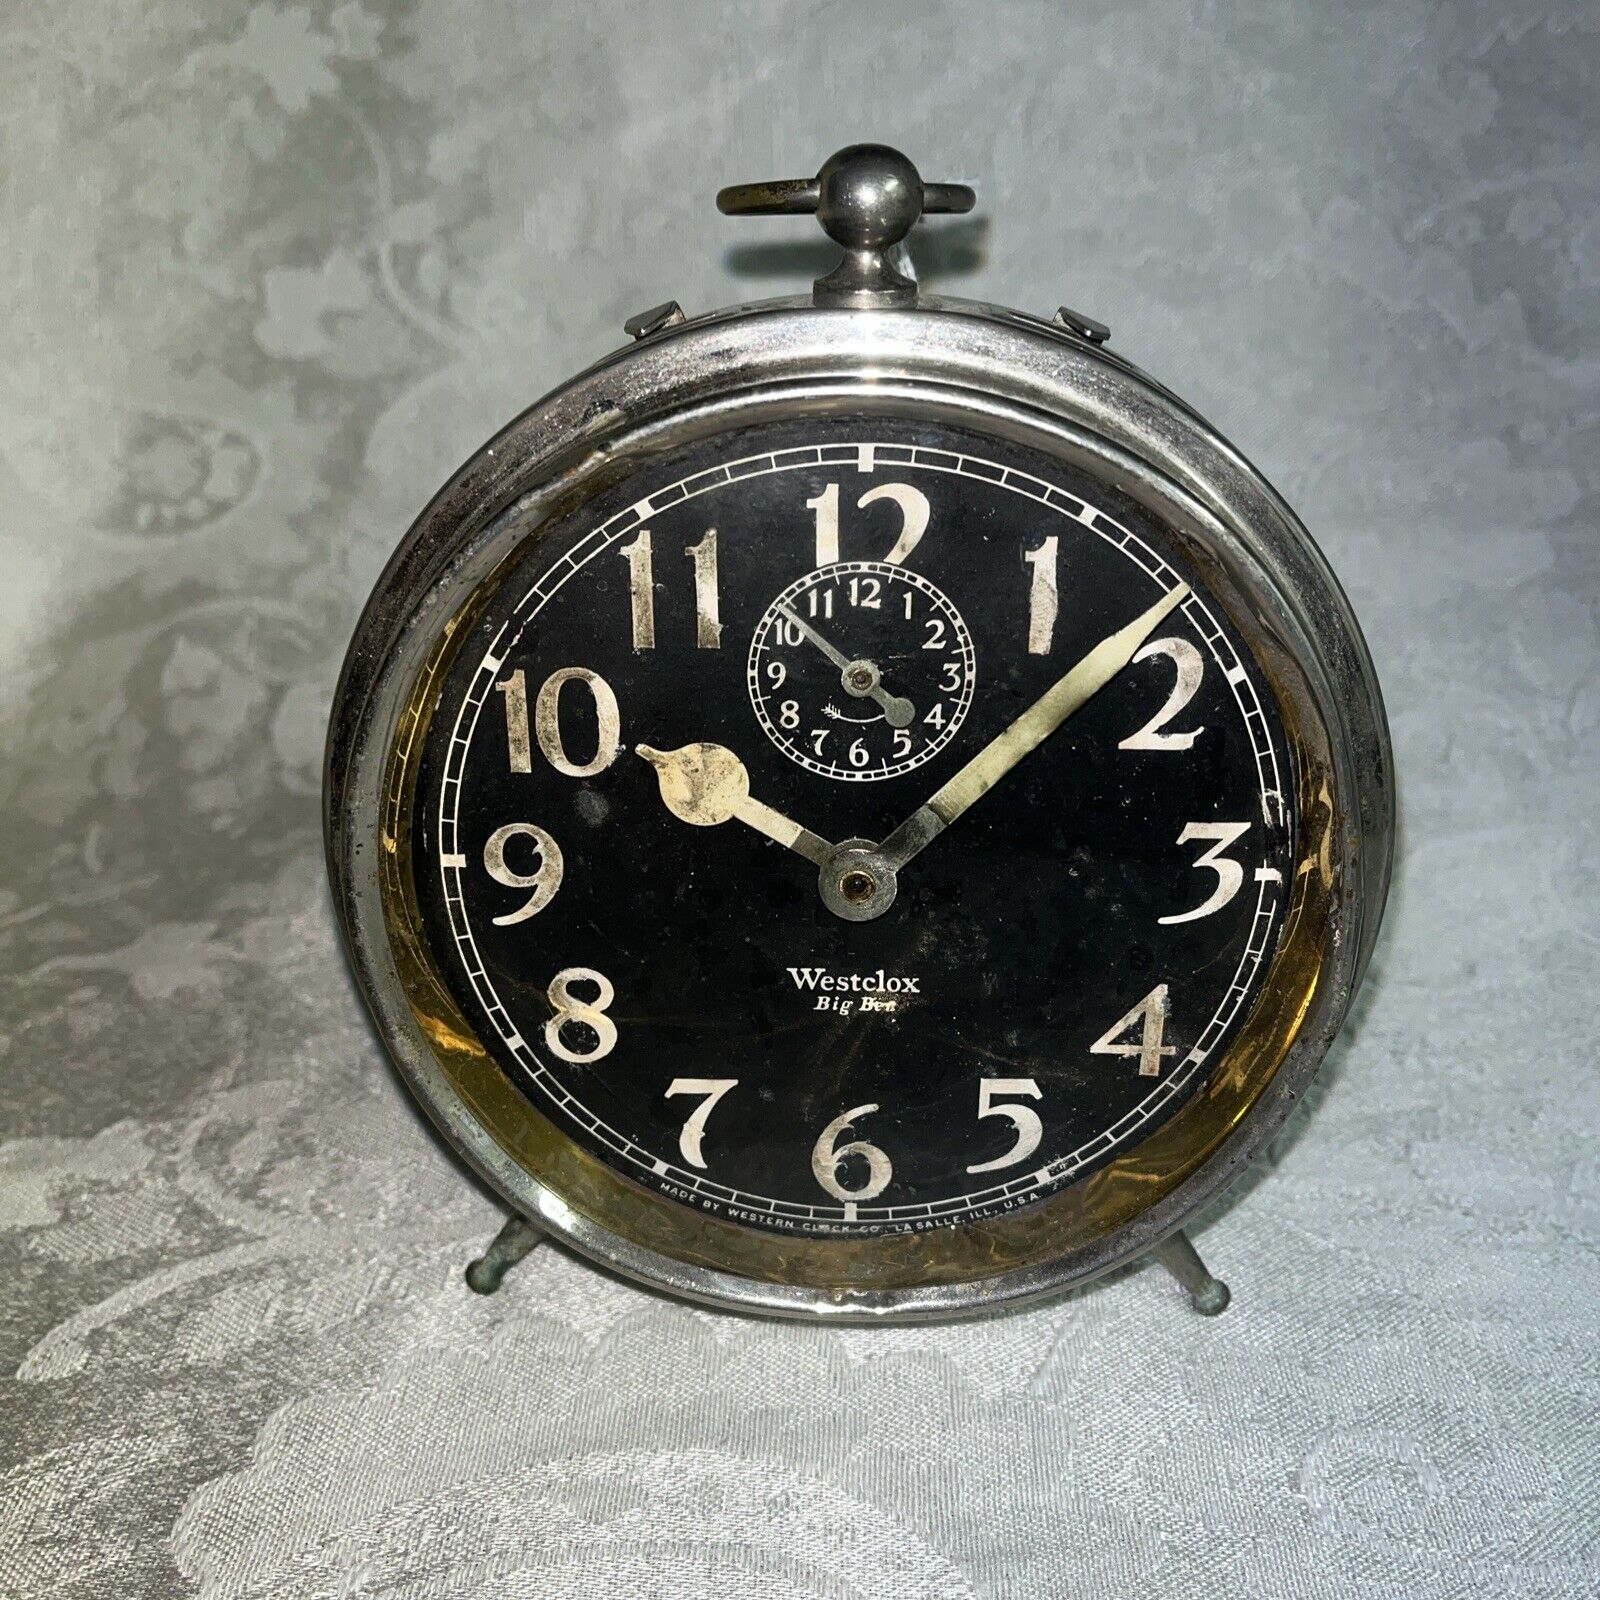 1919 Antique Westclox Radium Big Ben Alarm Clock Works & Glows Slightly Still